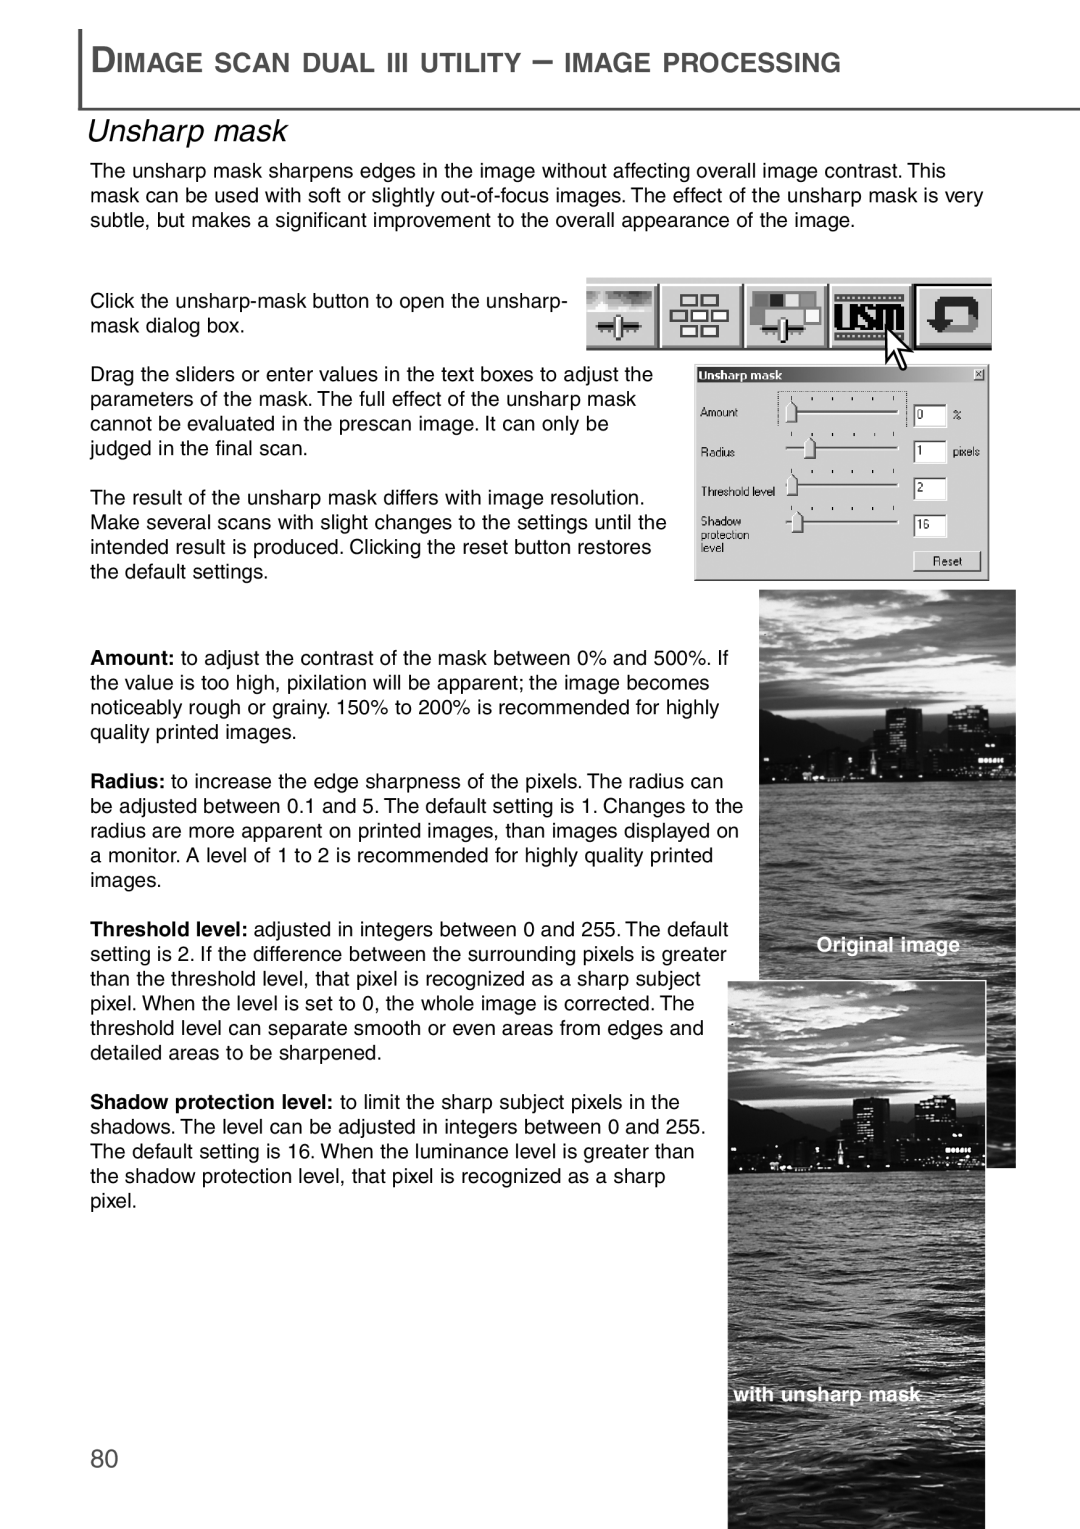 Konica Minolta AF-2840 instruction manual Unsharp mask, Dimage Scan Dual Iii Utility – Image Processing, with unsharp mask 